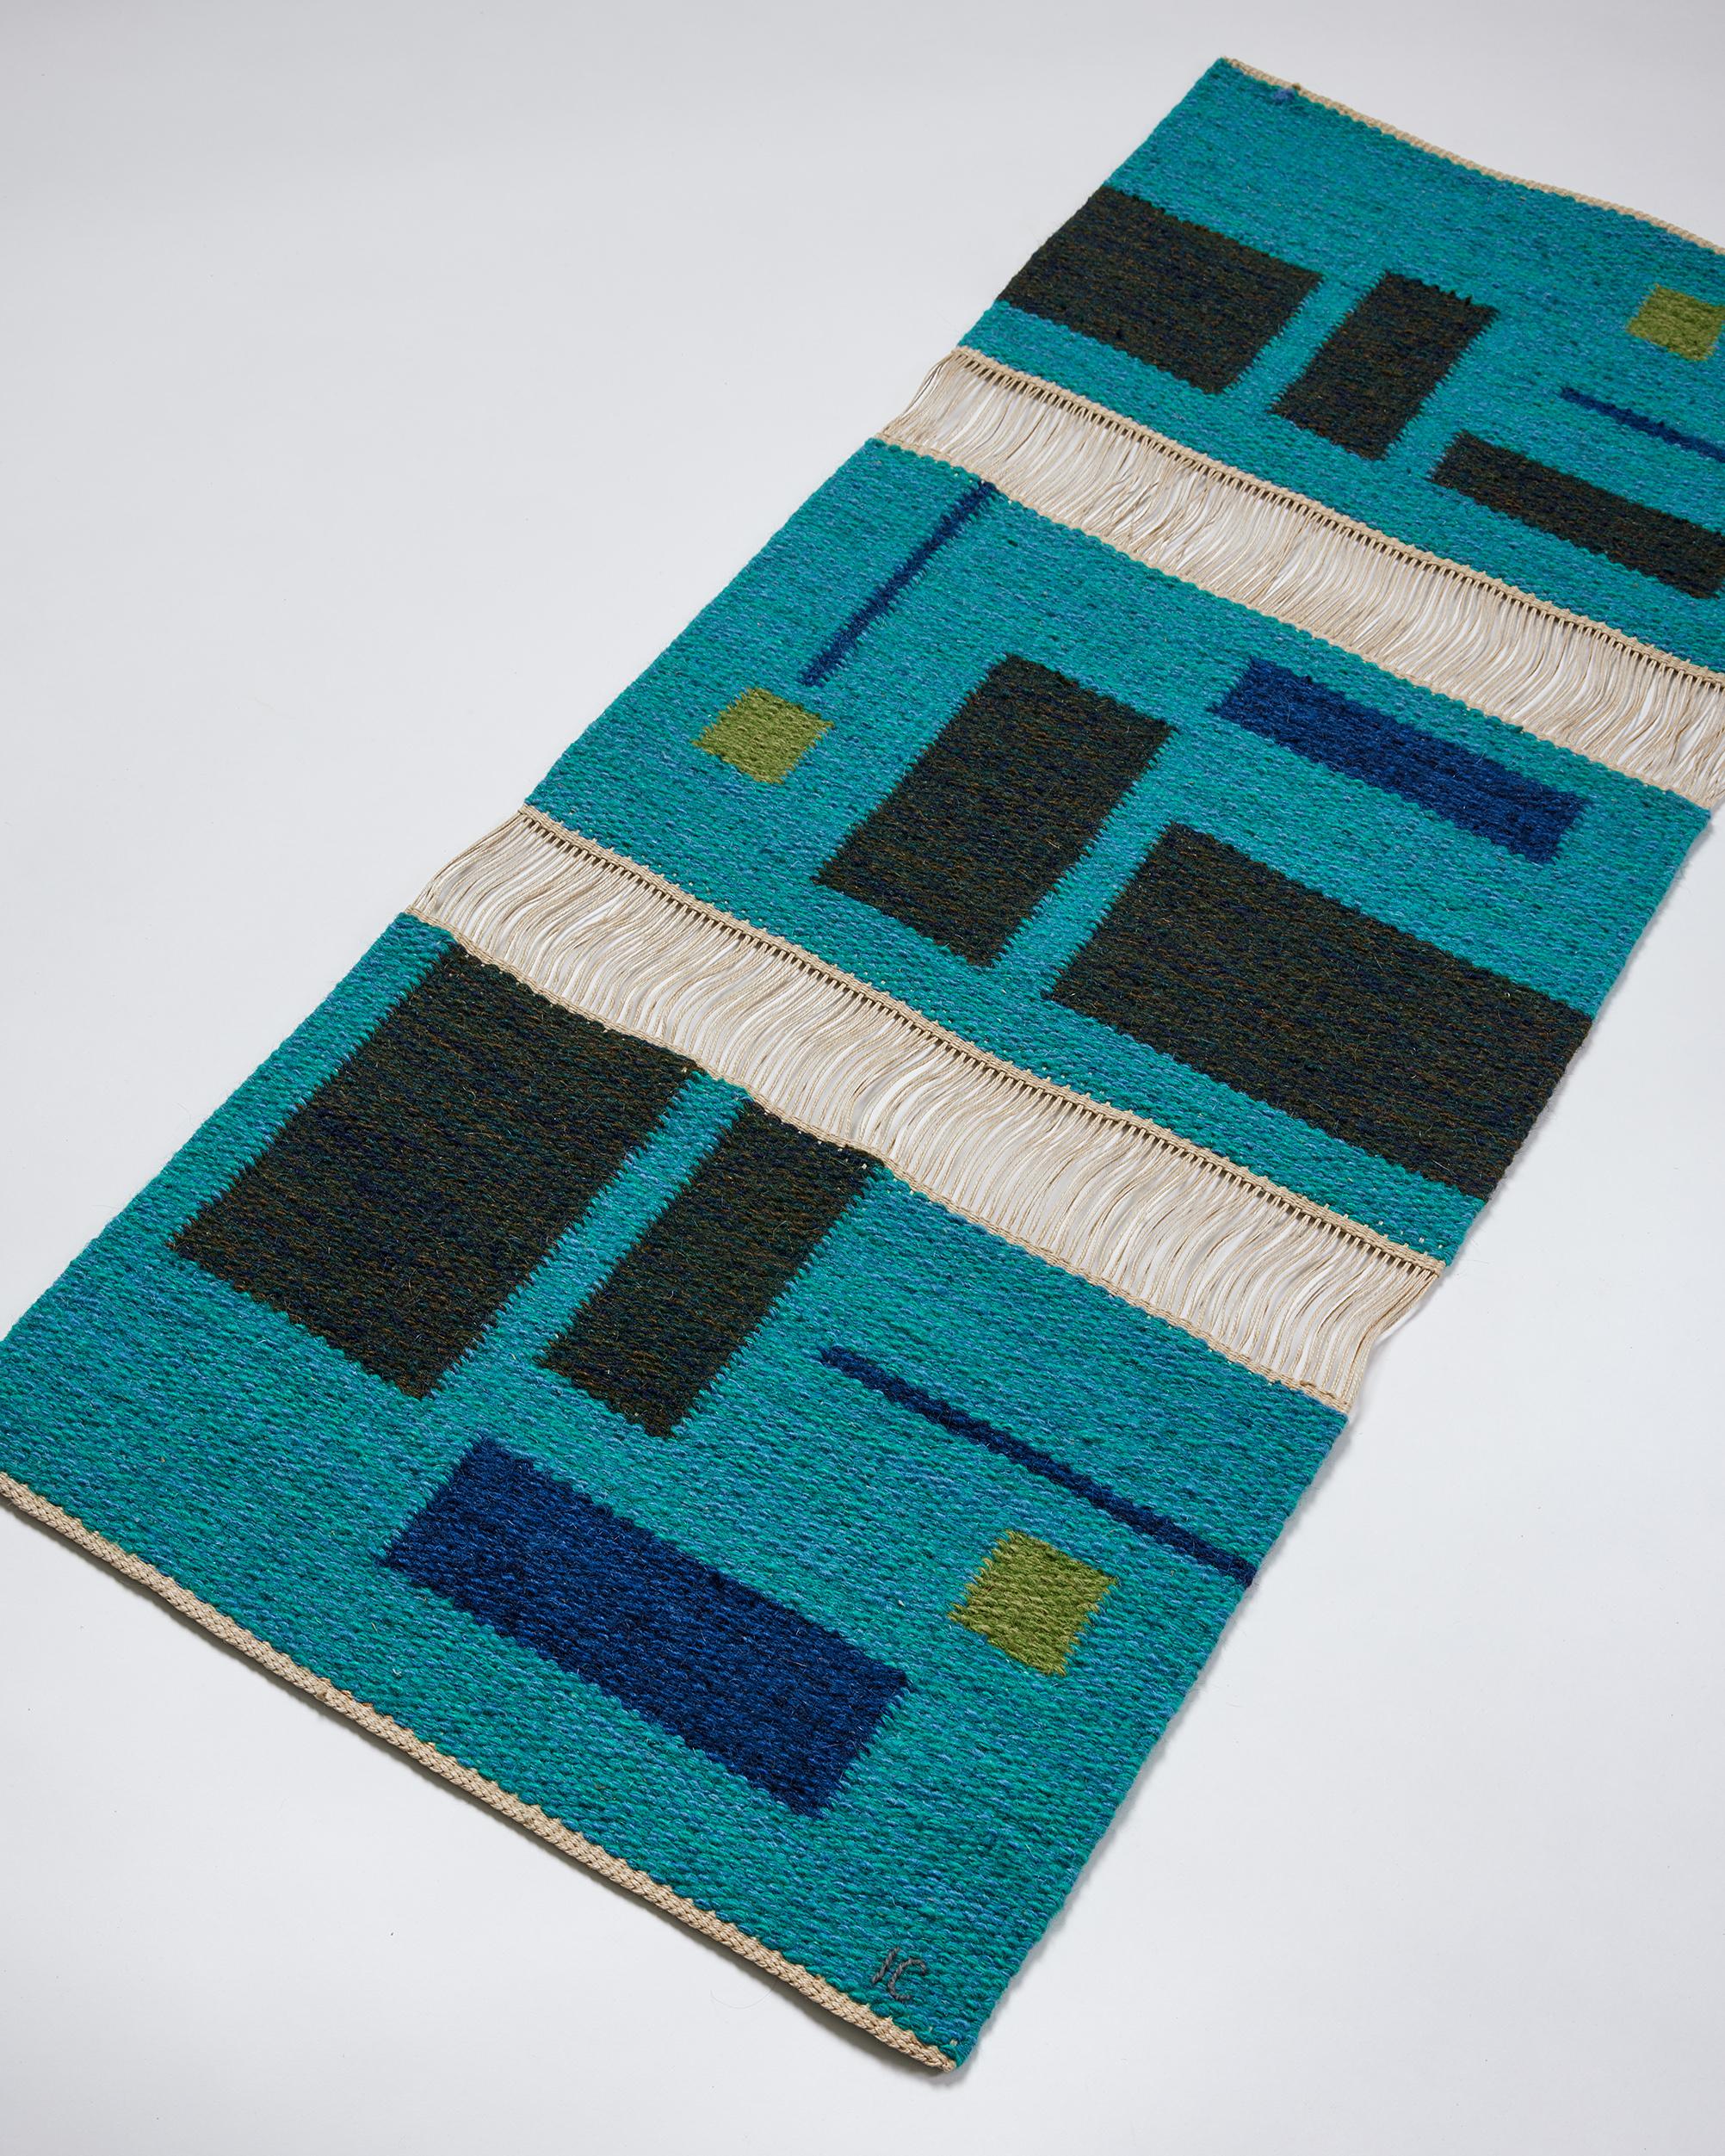 Mid-Century Modern Tapestry ‘Vävnad’ Designed by Ingemar Callenberg for Gammelstads Handväveri AB For Sale